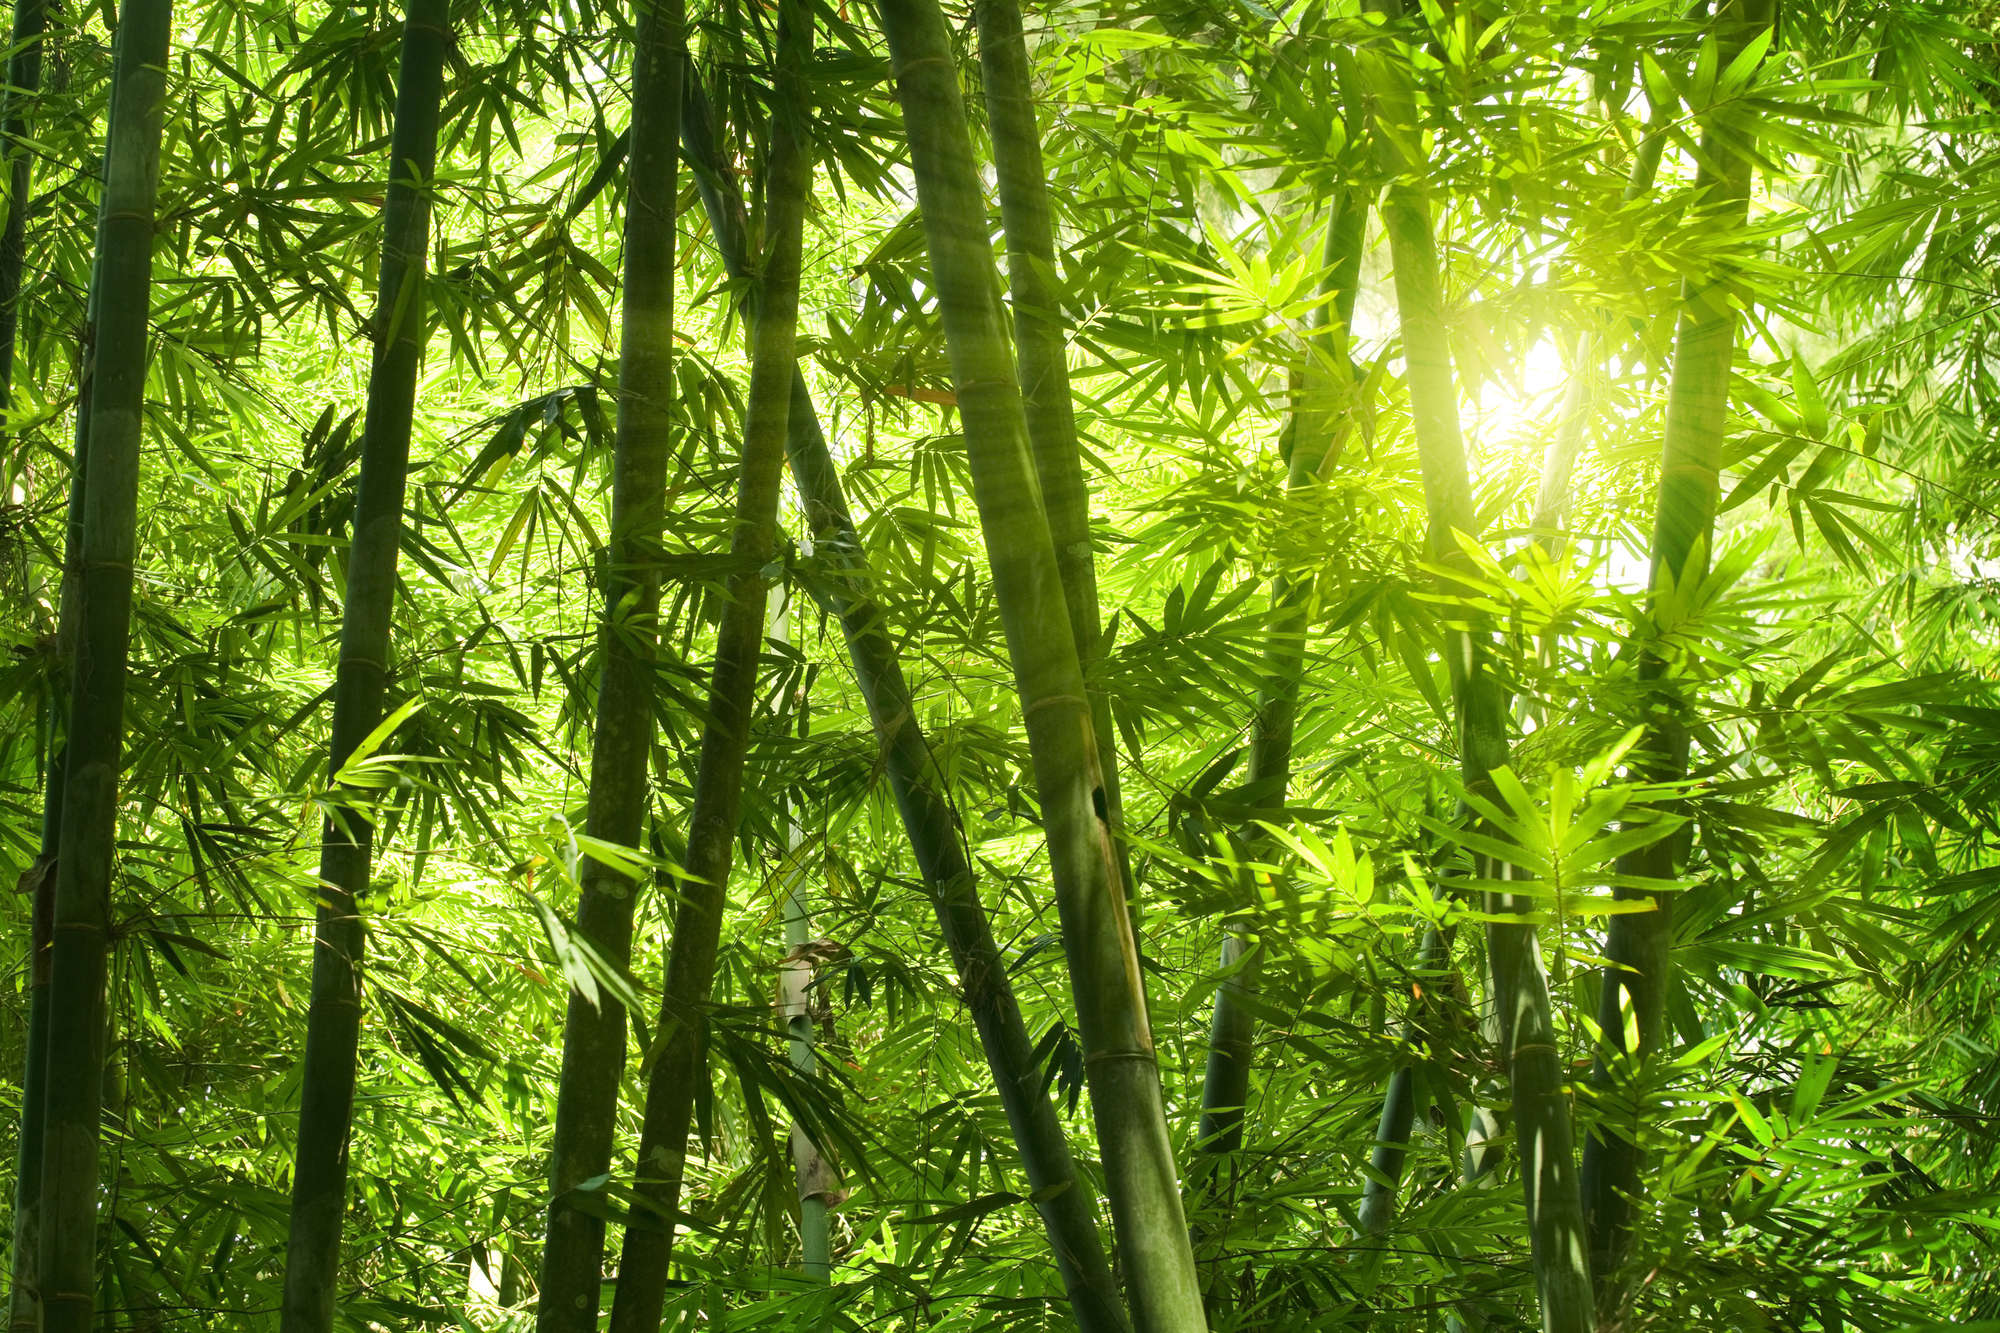             Natuurbehang bamboebos motief op parelmoer glad vlies
        